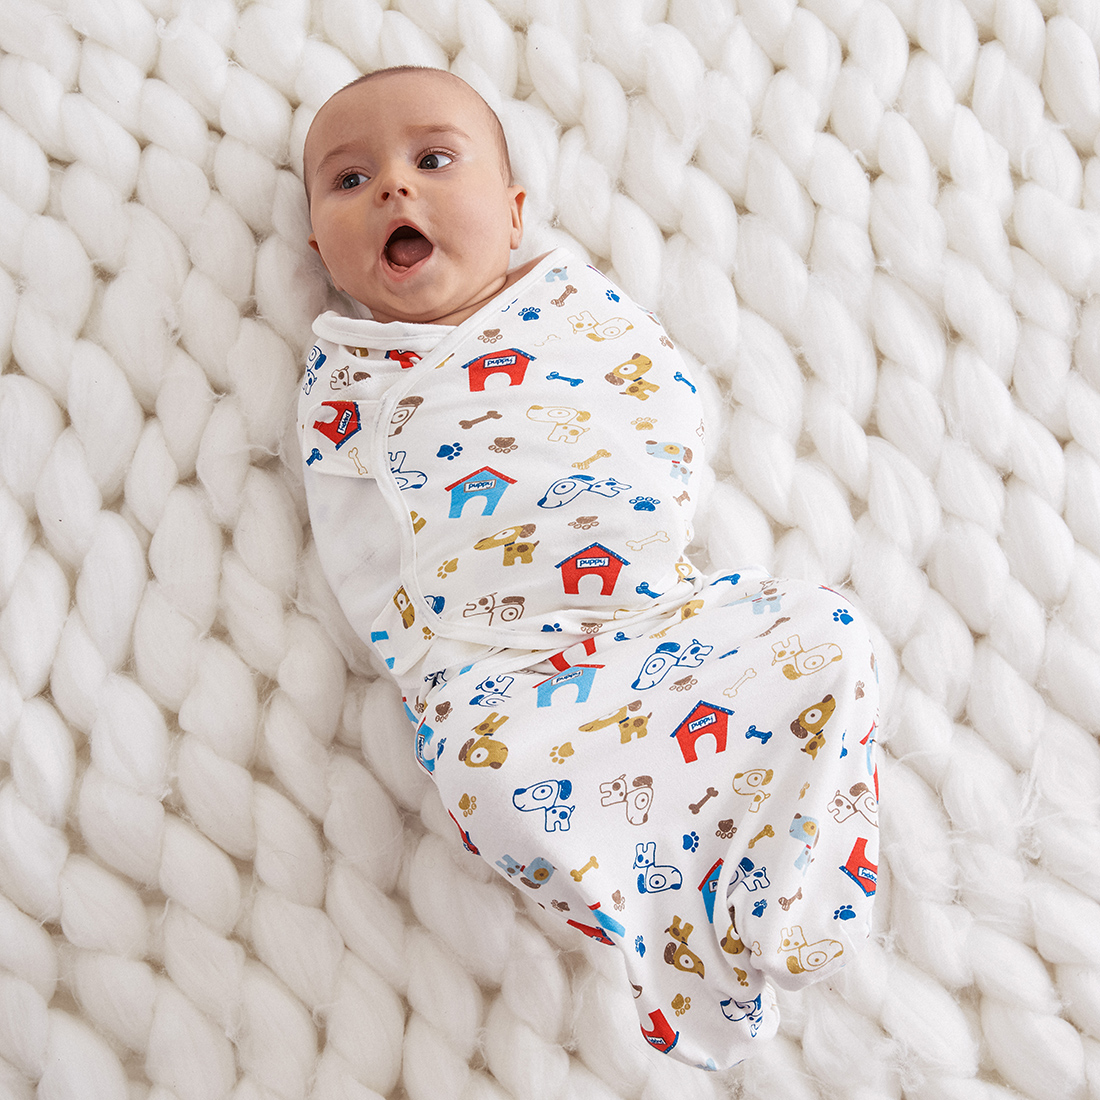 Newborn Baby Cartoon Sleeping Bags 100% Cotton Baby Blanket Swaddling Wrap Sleepbag